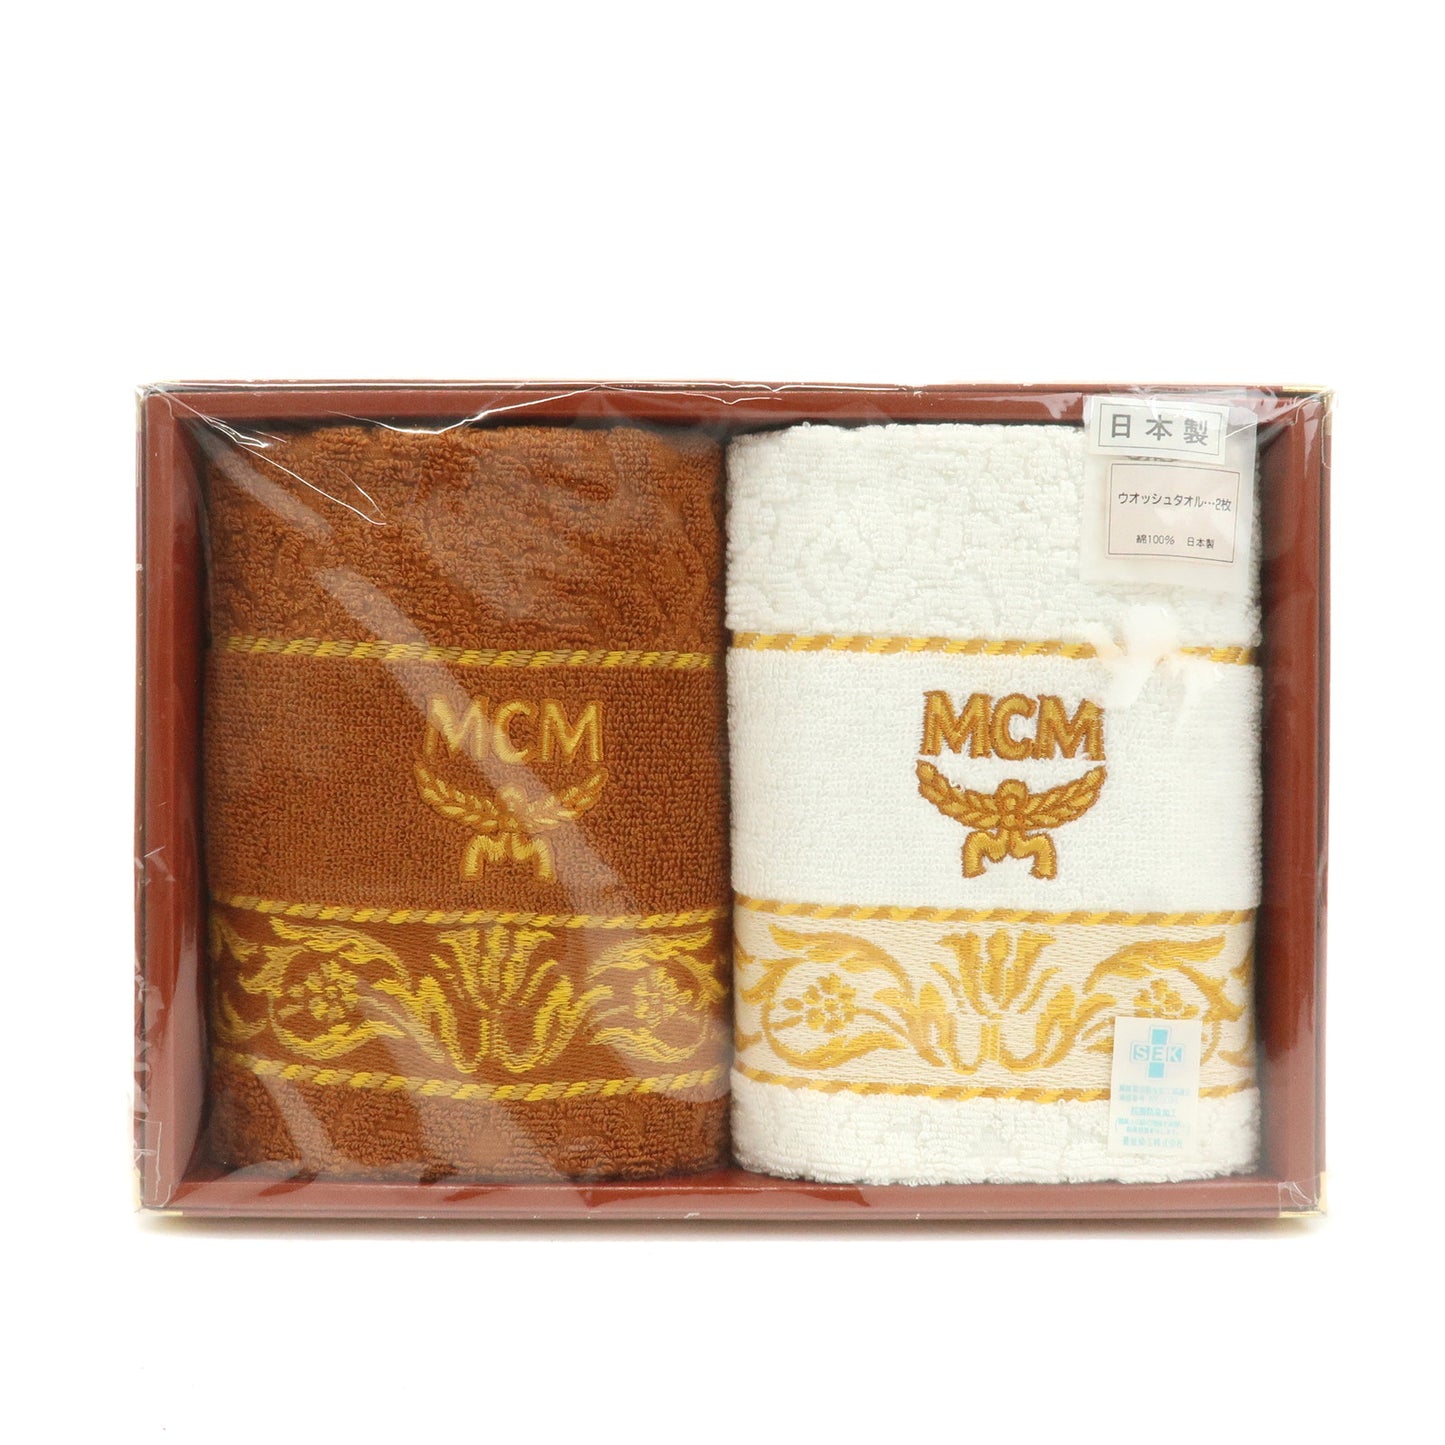 MCM Set of 2 Towel Cotton 100% Towel Brown Orange White